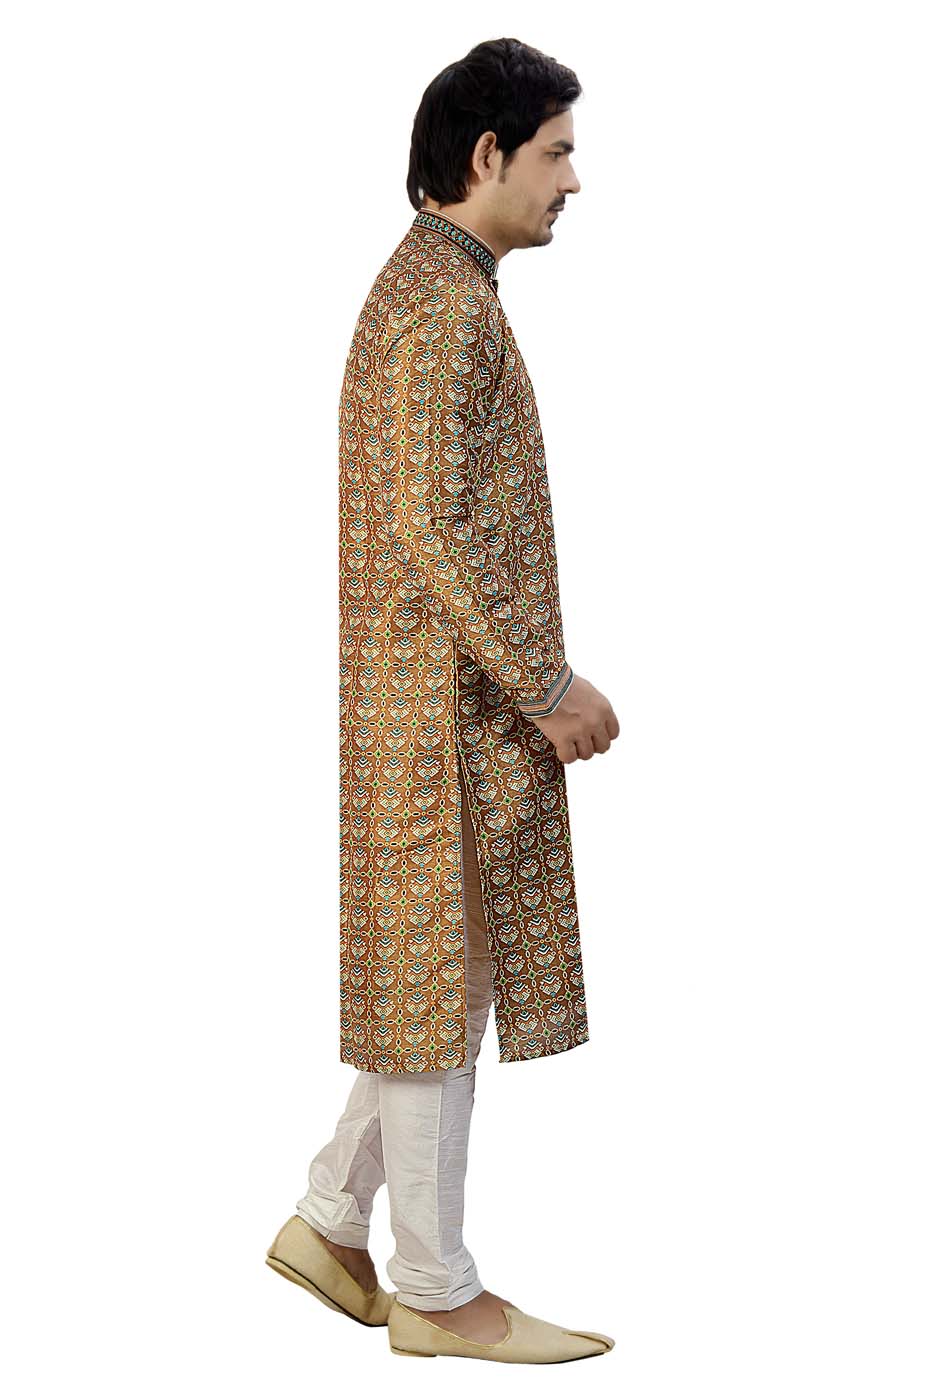 Digital Print Silk Kurta Suit With Resham Thread Work On Neck Line - Brown